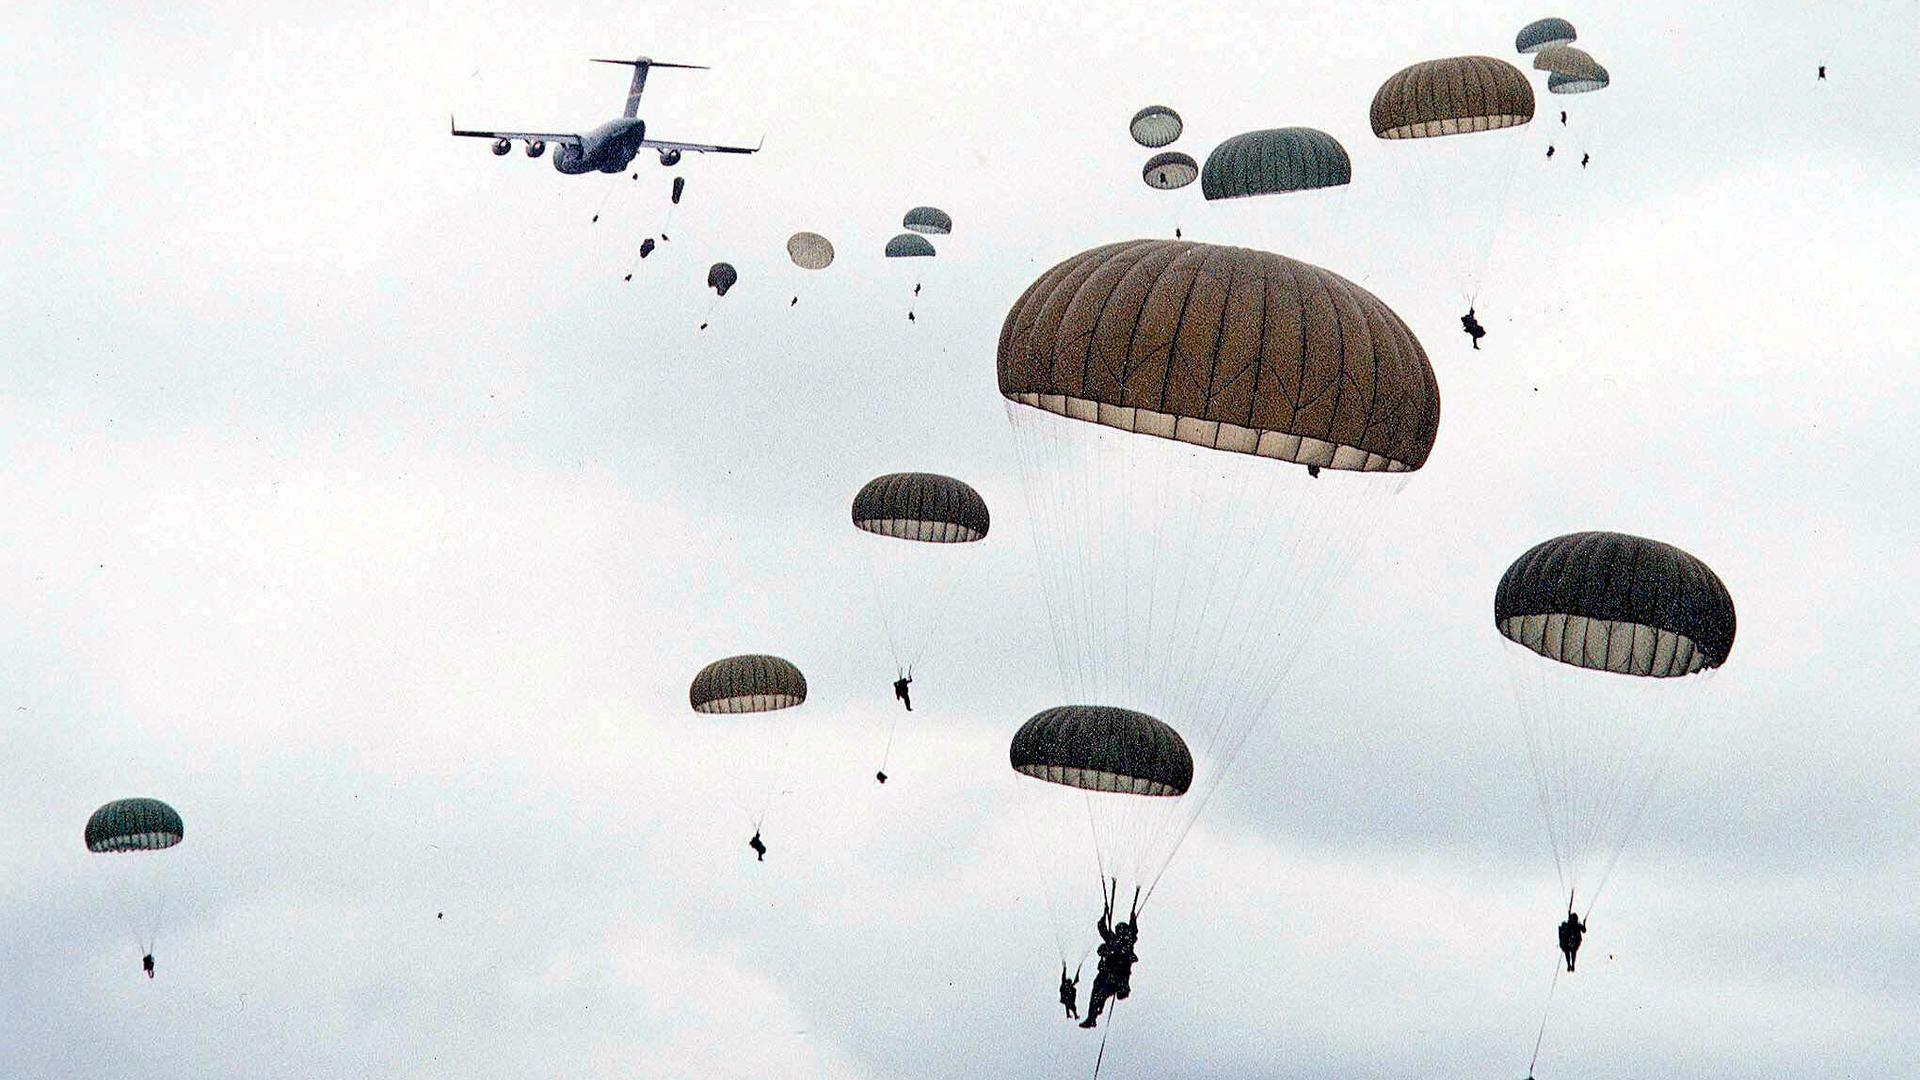 US paratroopers parachute at the Yavoriv training range in the western Lviv region, Ukraine, on Monday, July 17, 2000. 